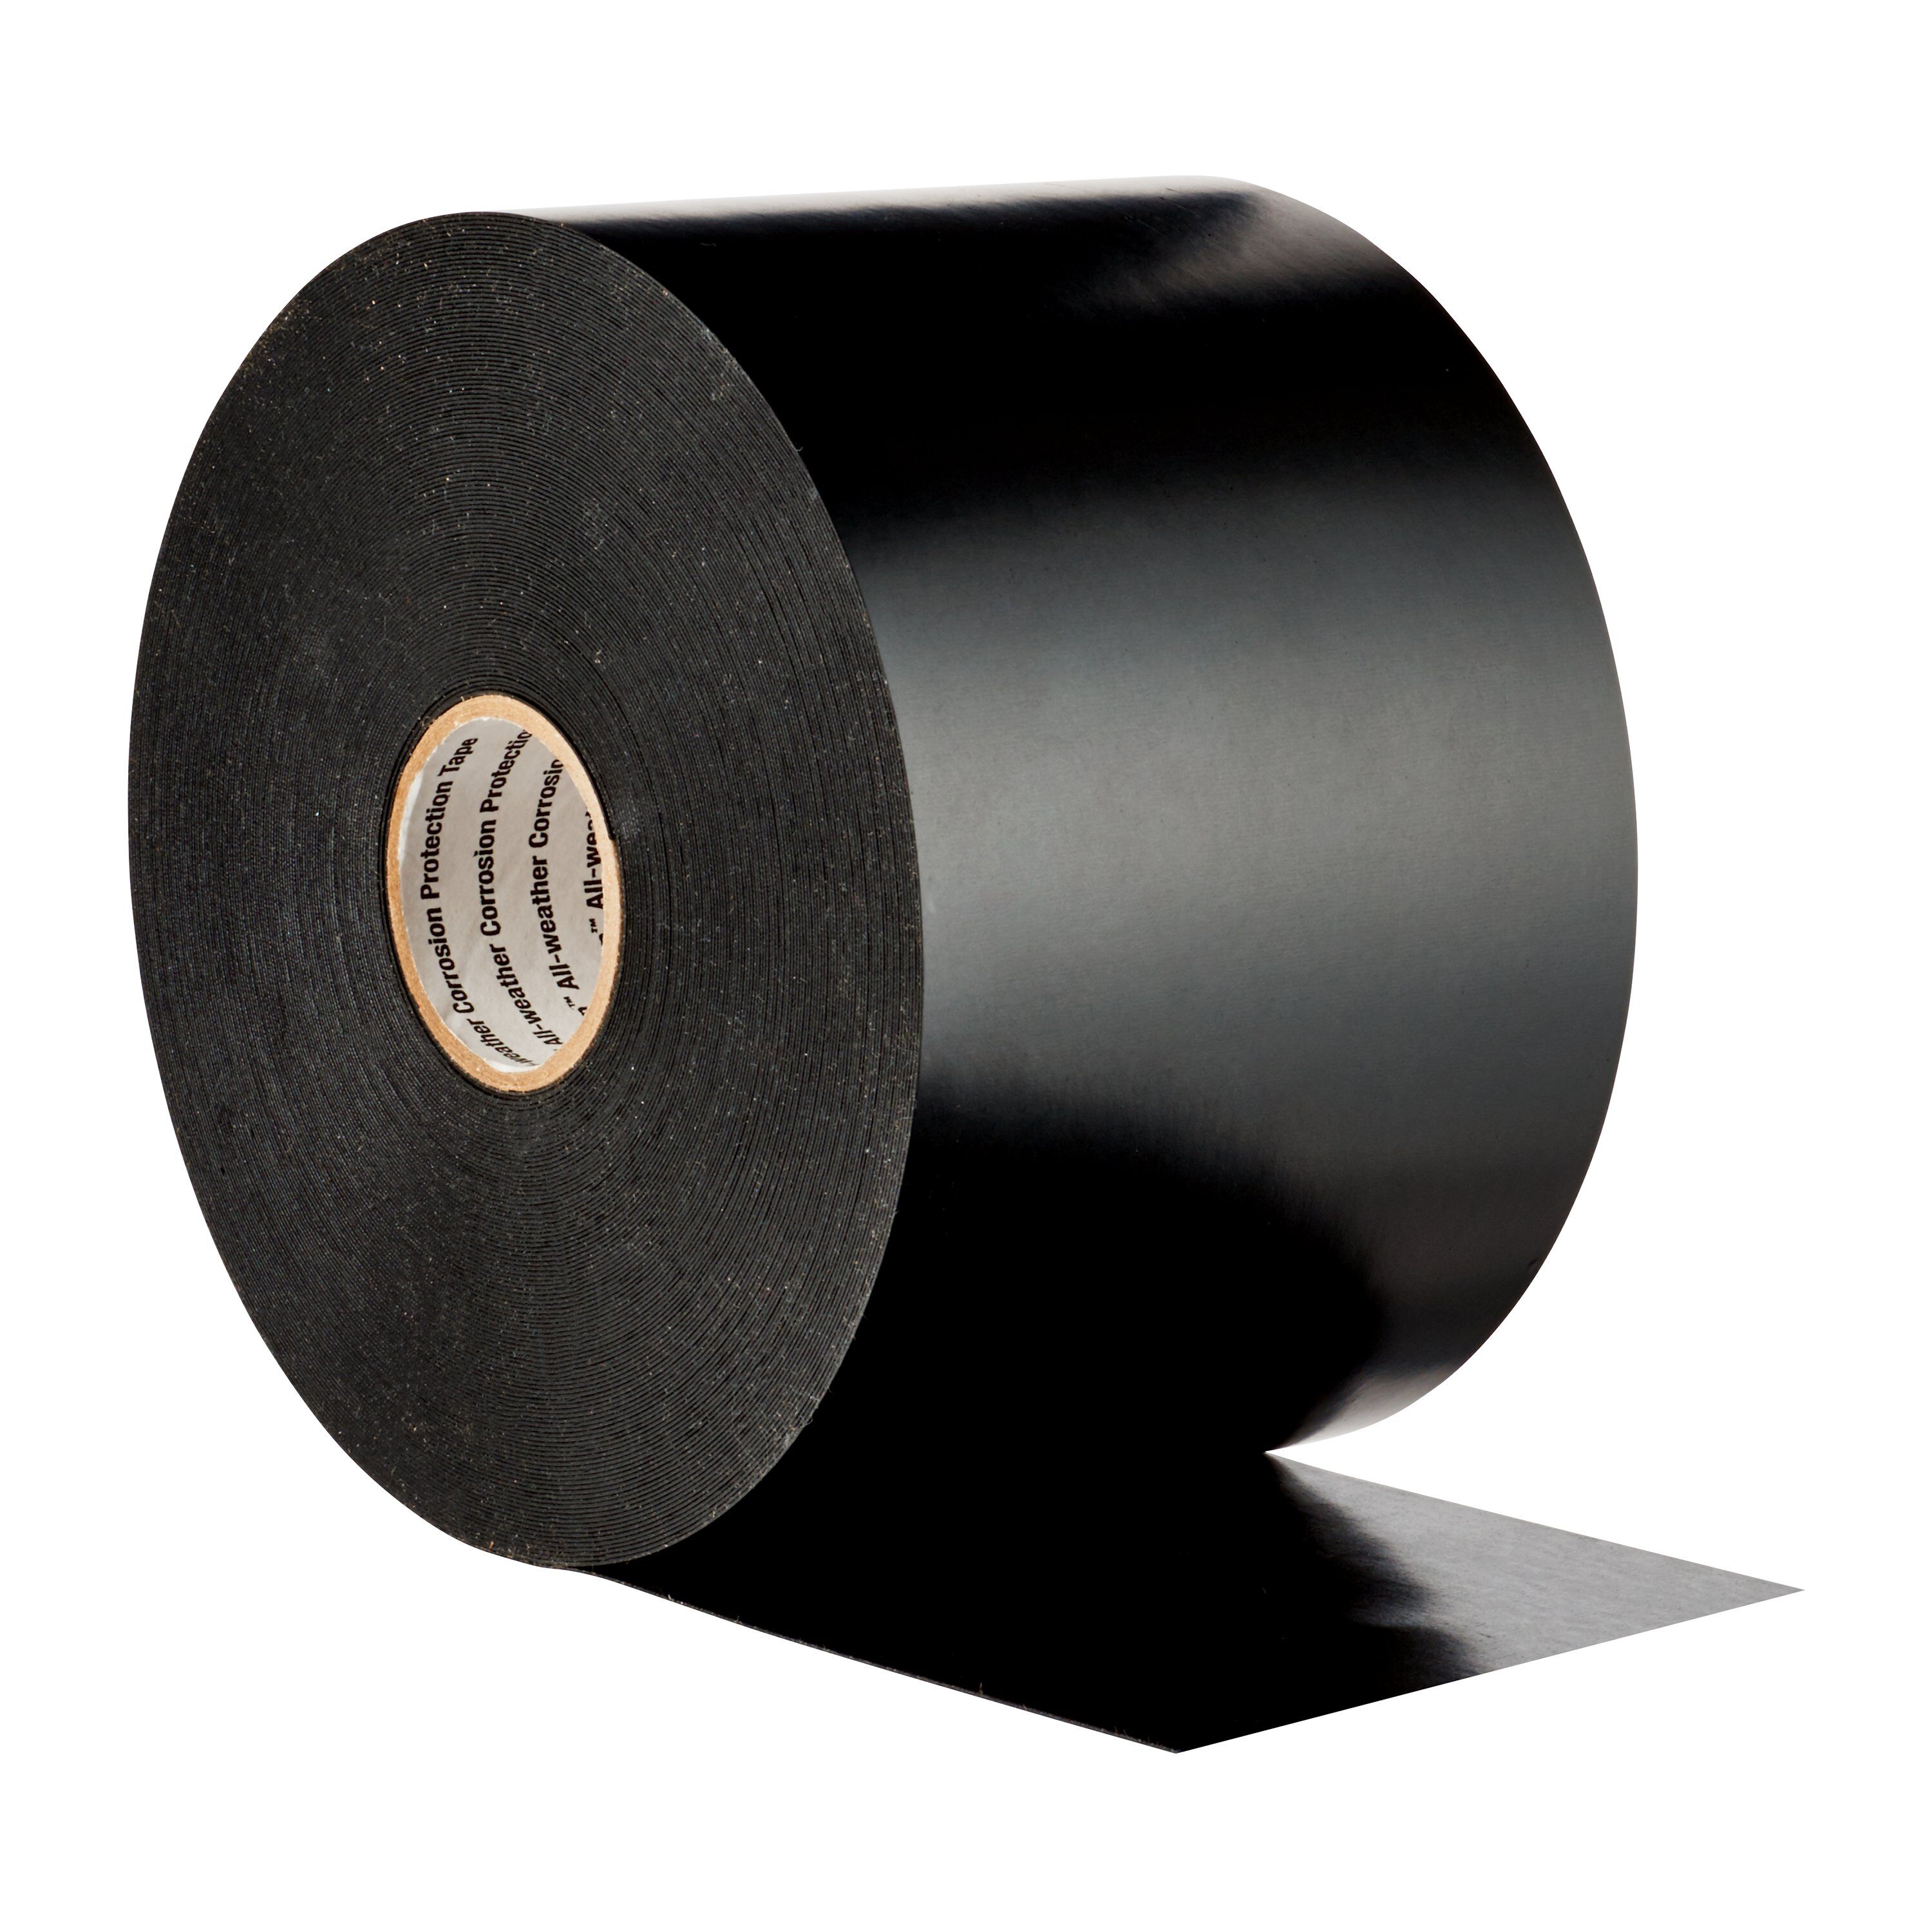 3M Scotchrap Vinyl Corrosion Protection Tape 51, 4 in x 100 ft, Unprinted